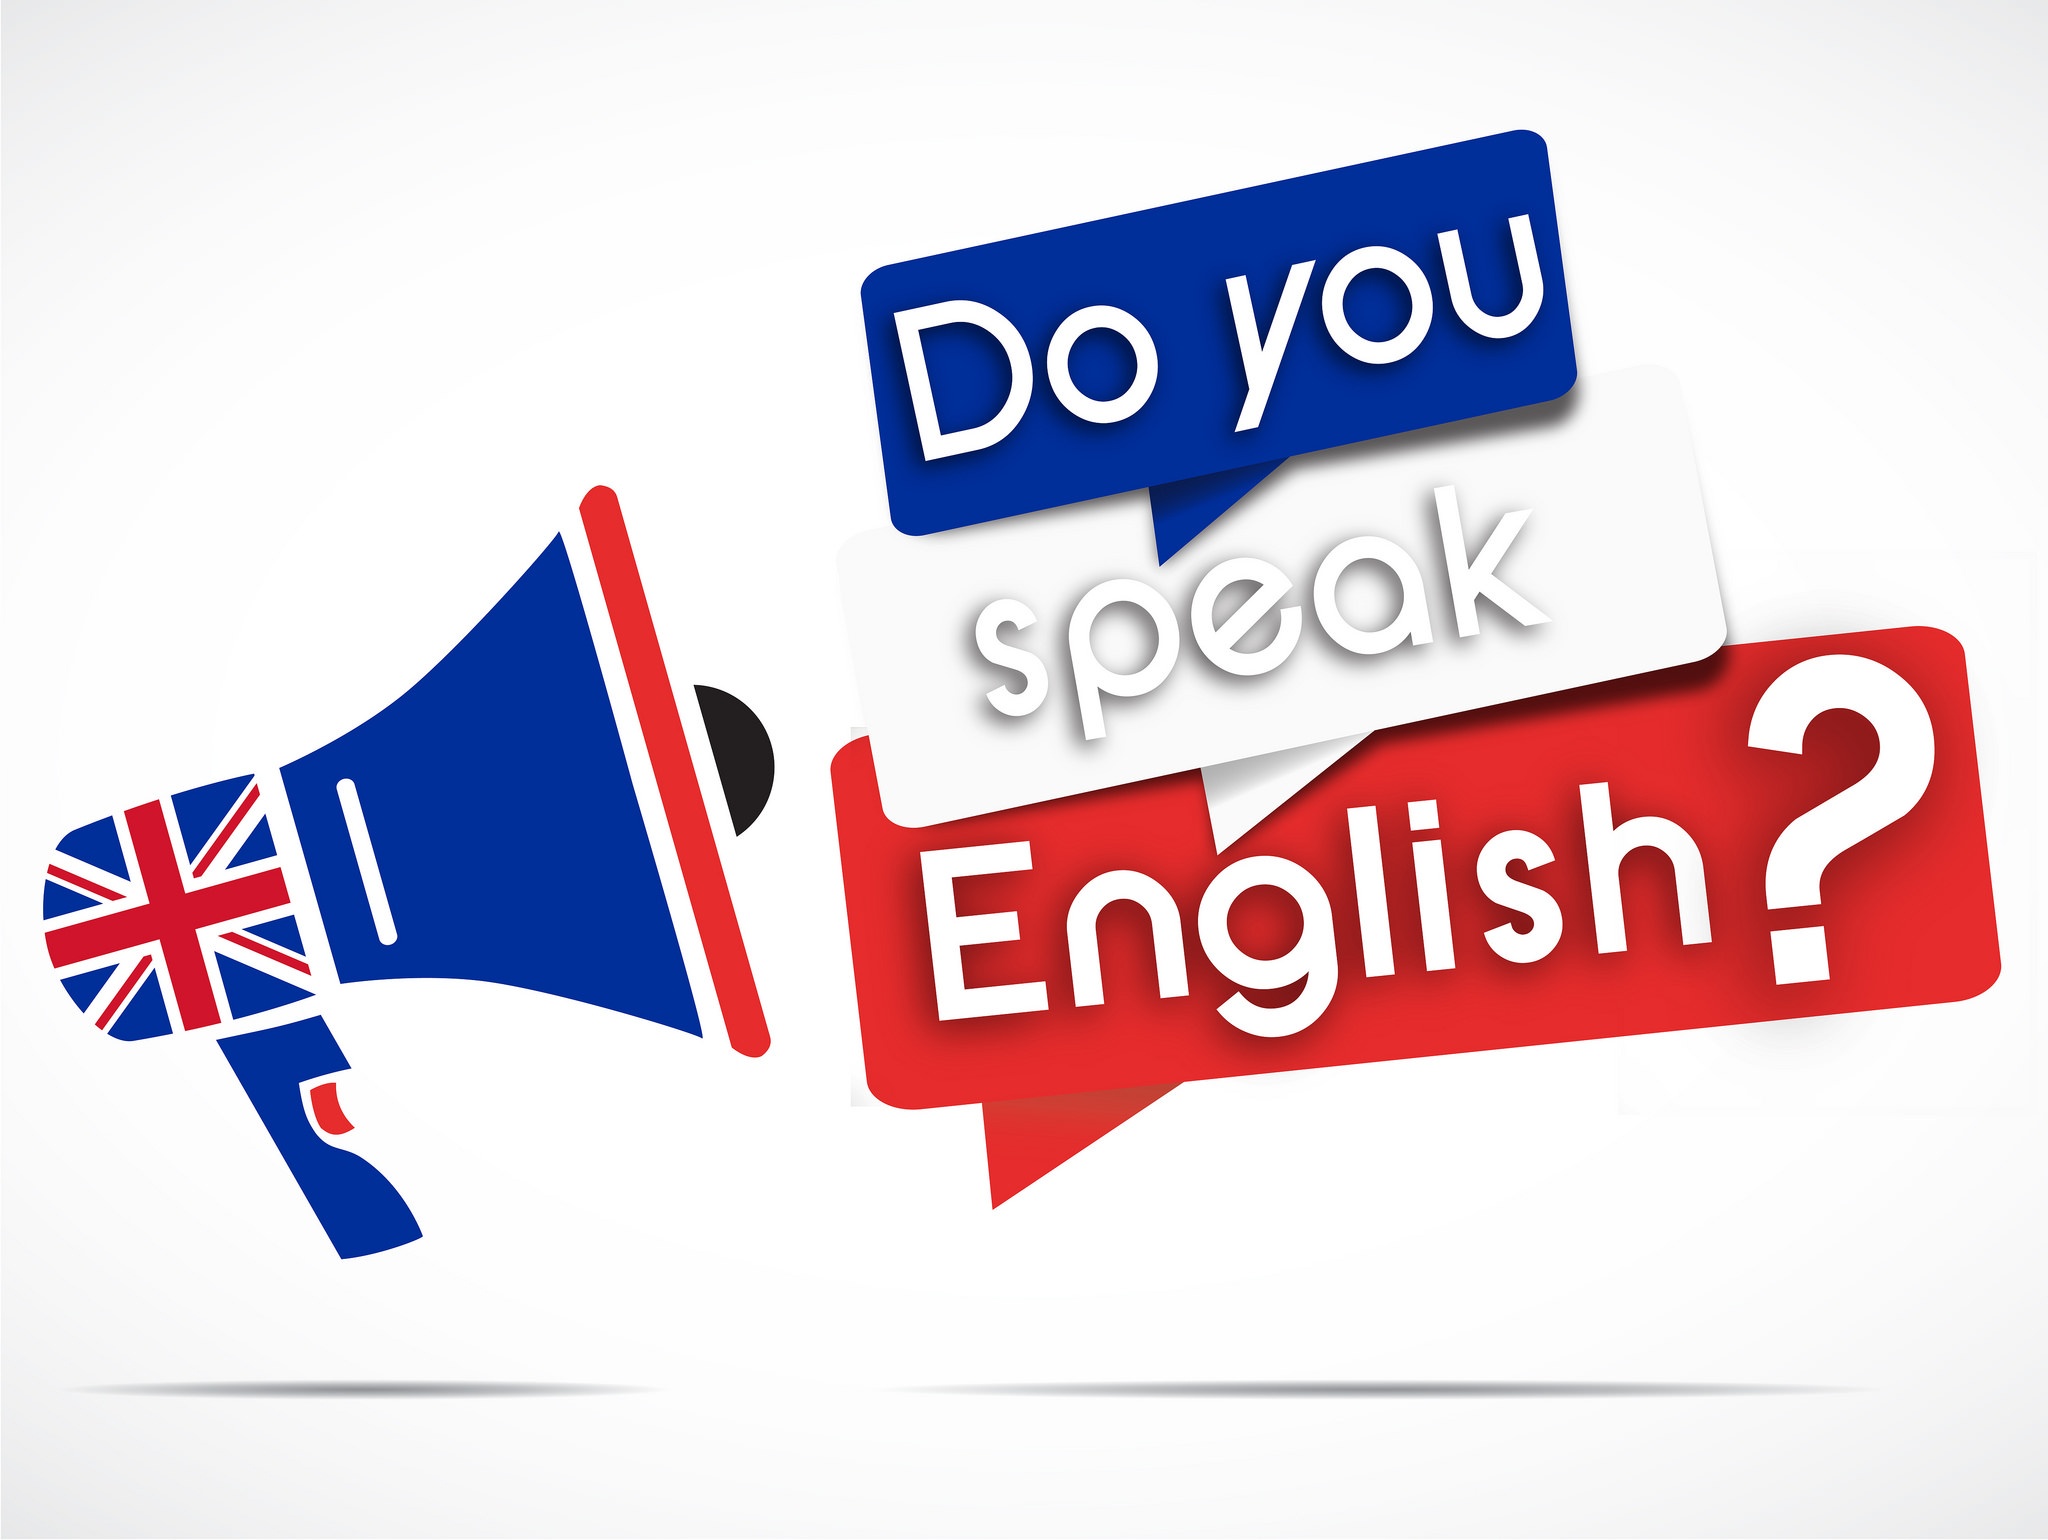 Do you don t speak english. Speak English картинка. Do you speak English. Speak English надпись. Английский язык do you speak.